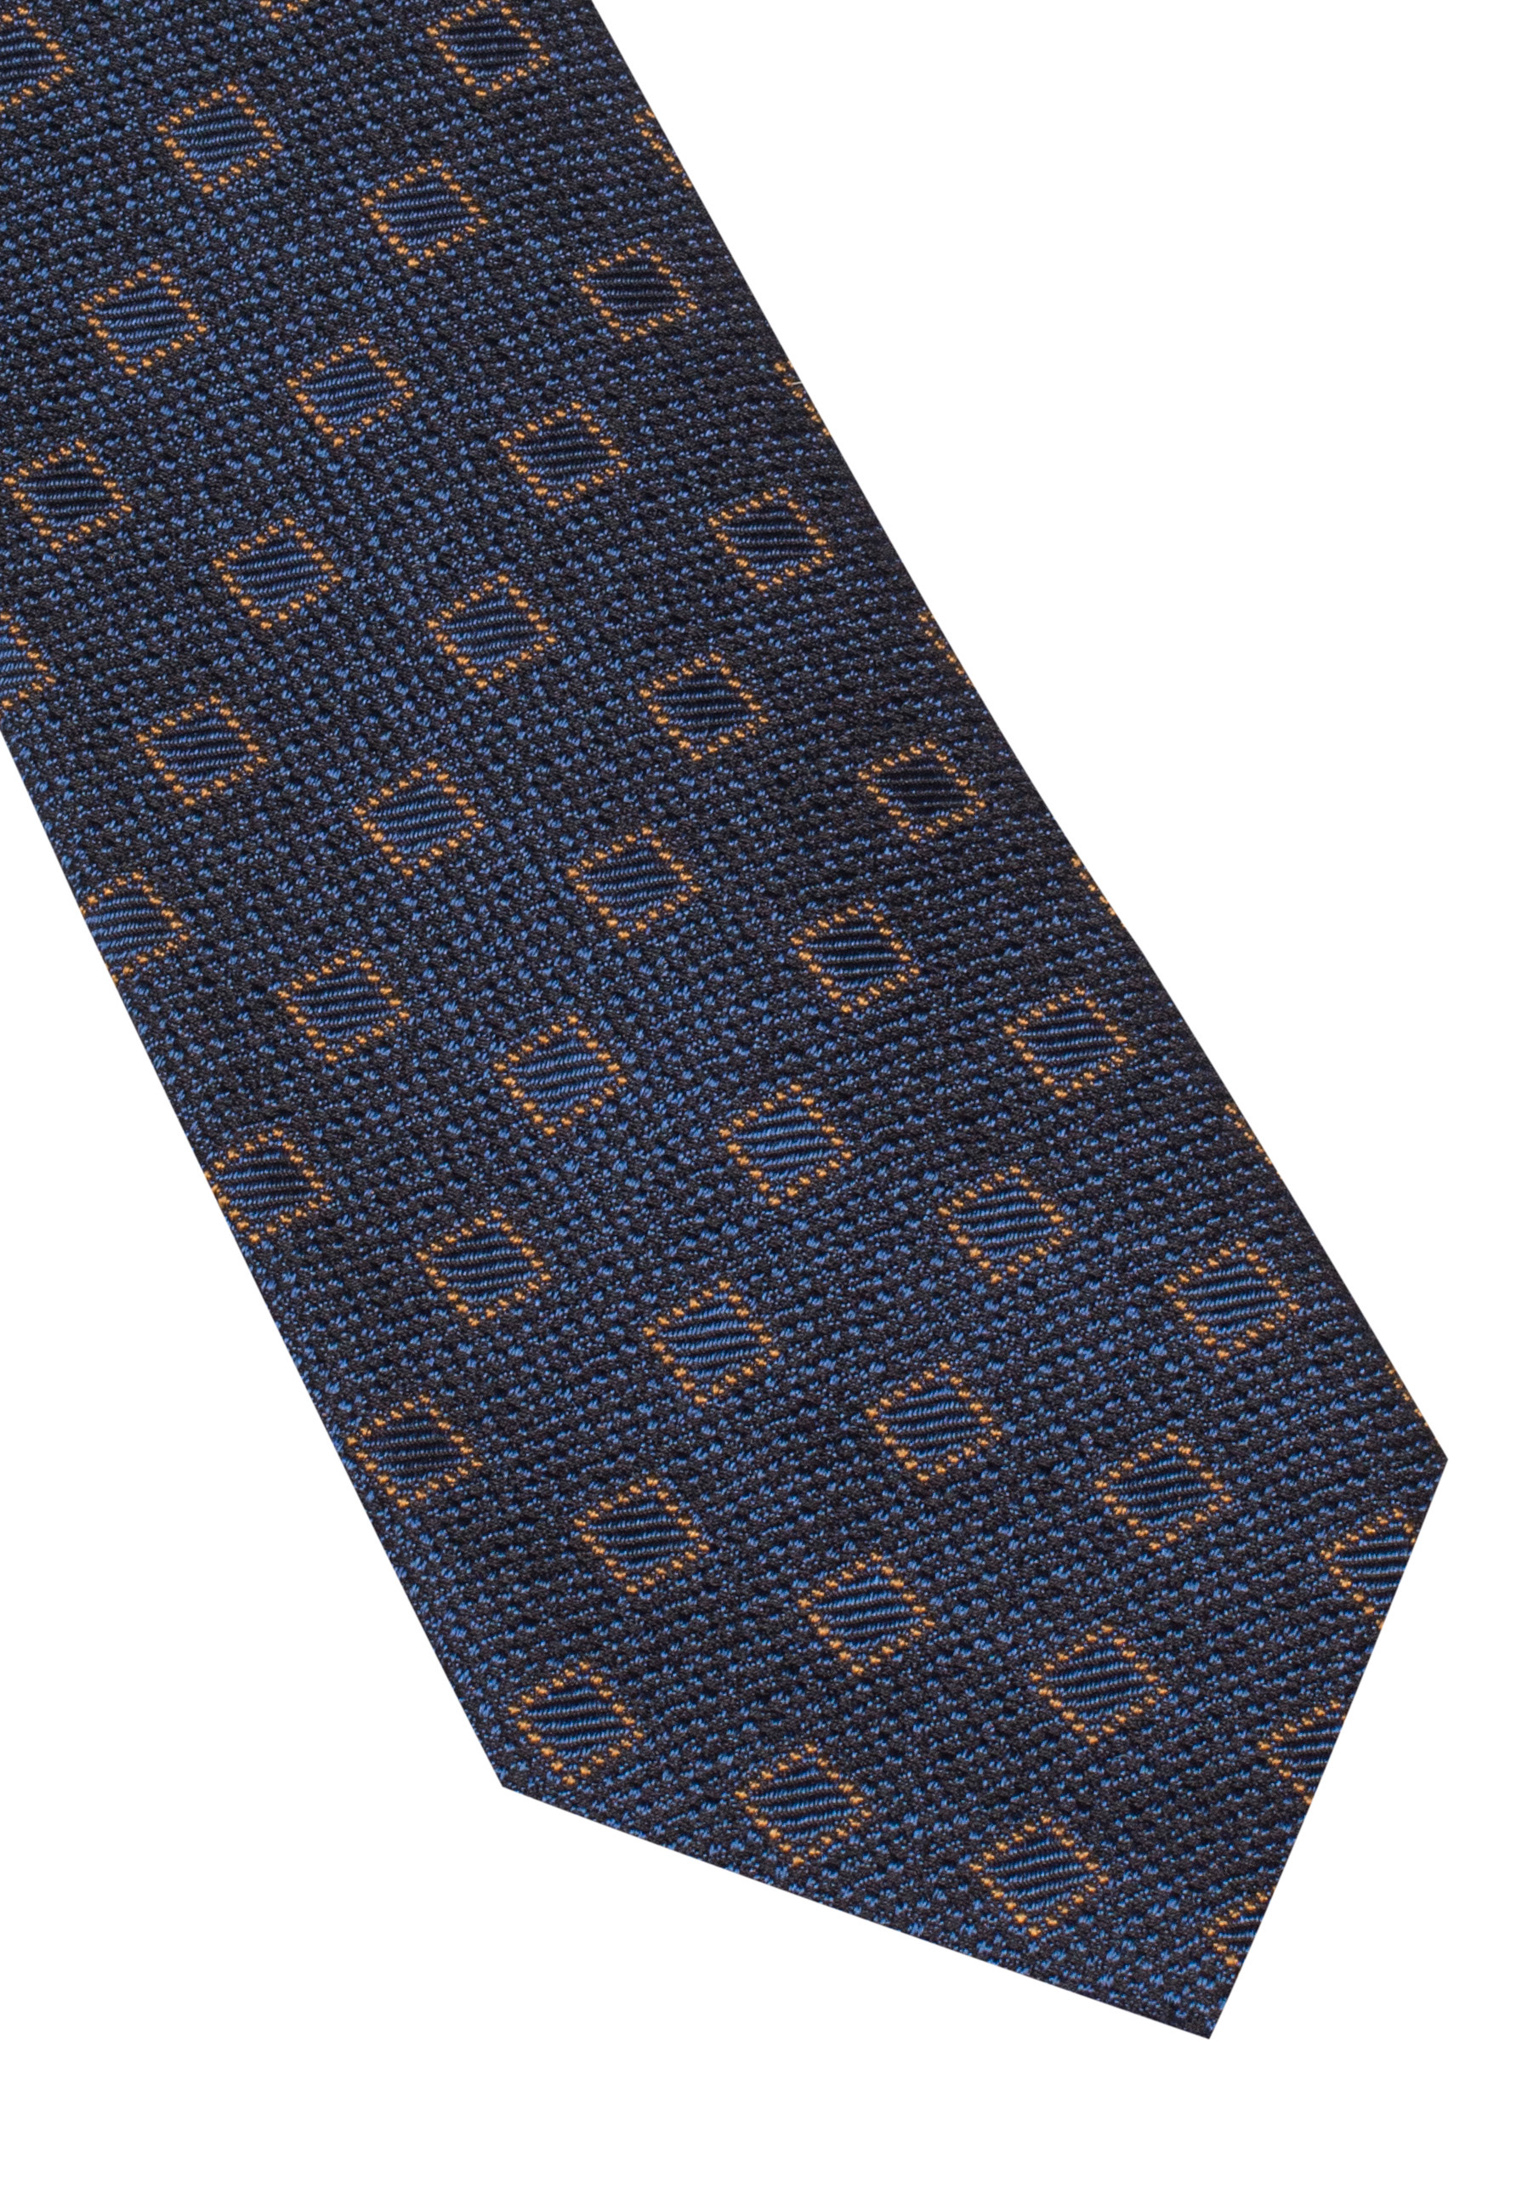 Krawatte in dunkelblau kariert 142 | | 1AC00461-01-81-142 | dunkelblau